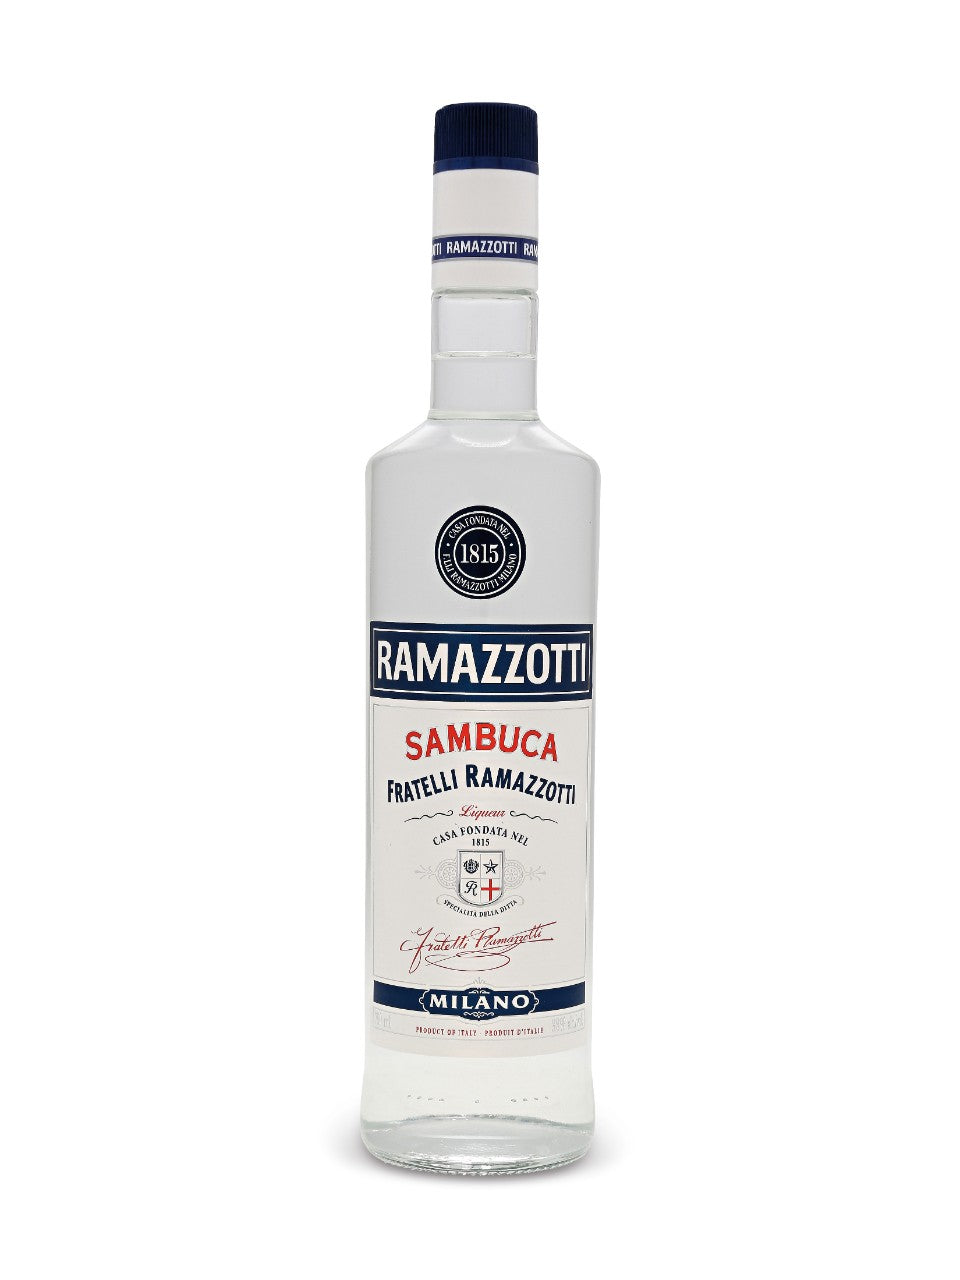 Ramazzotti Sambuca 750 mL bottle